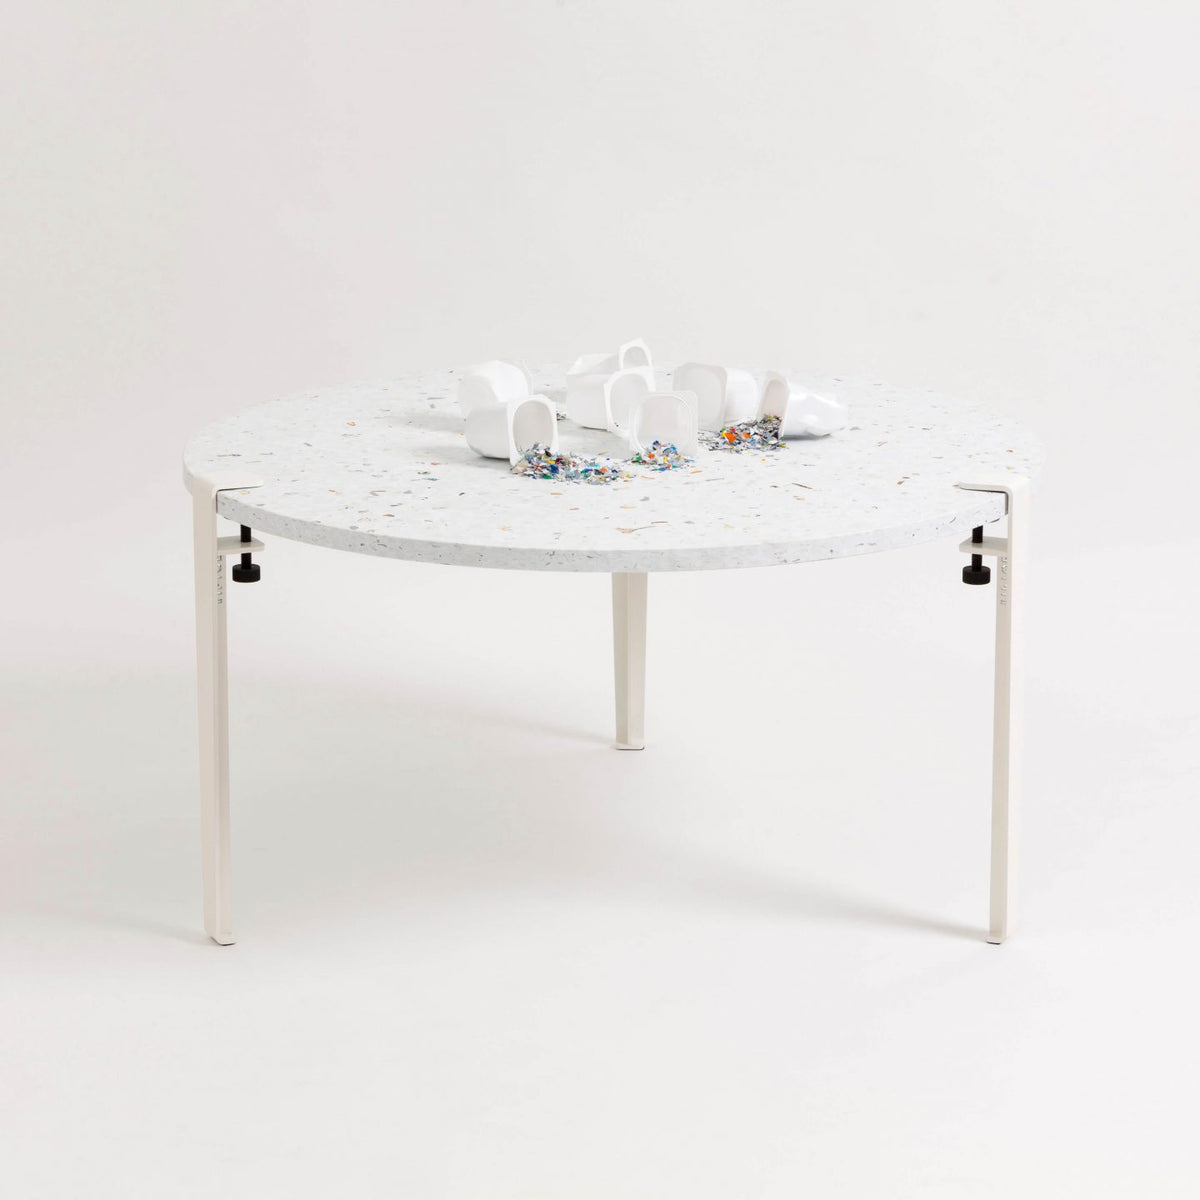 Venezia Recycled Plastic Coffee Table by Tiptoe